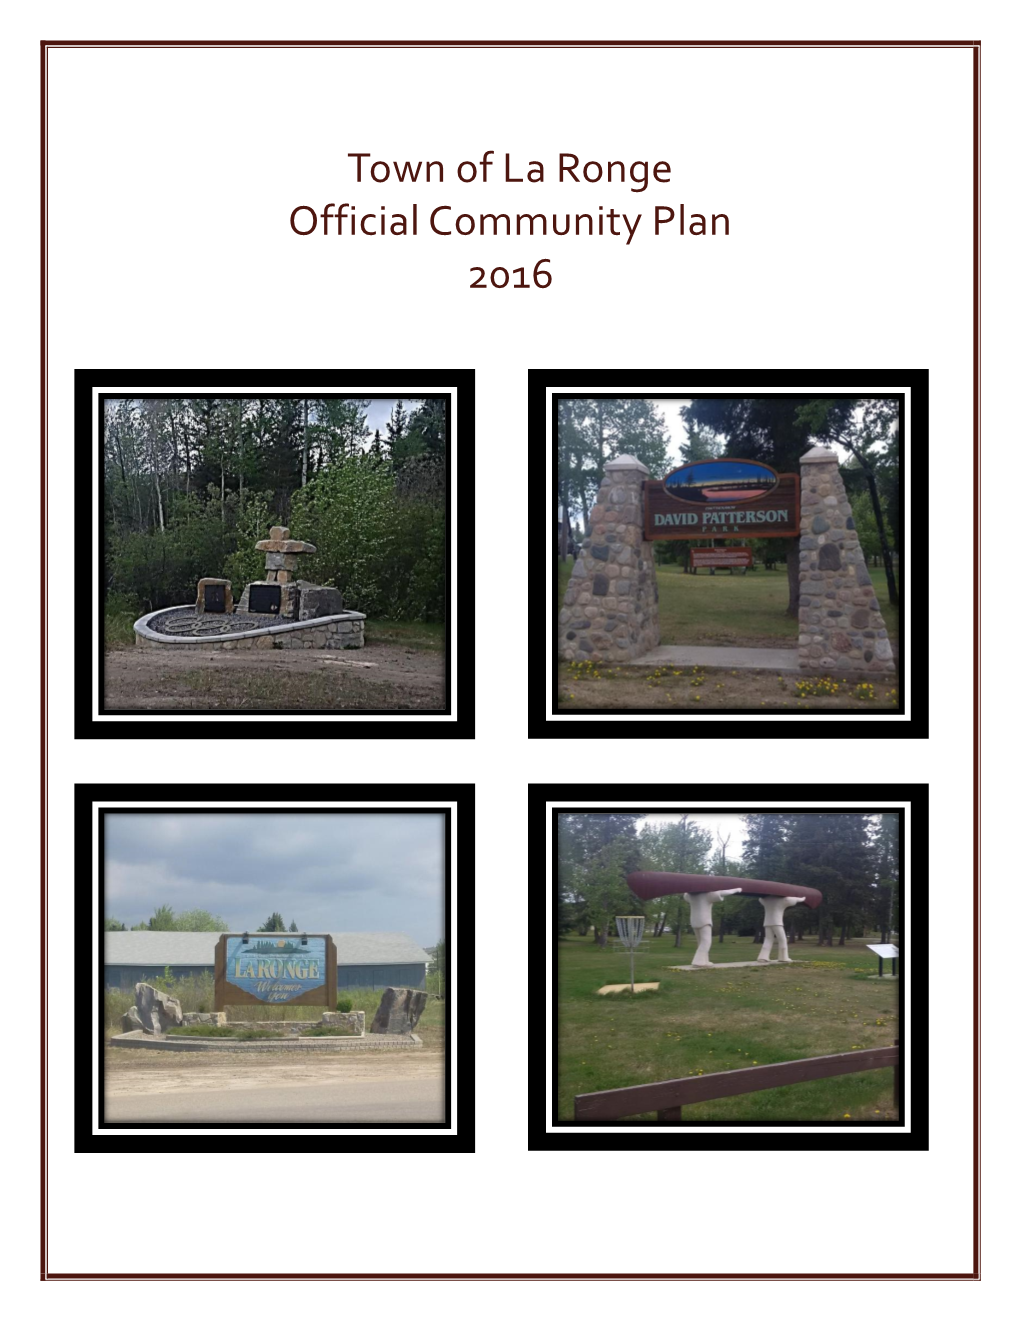 Town of La Ronge Official Community Plan 2016